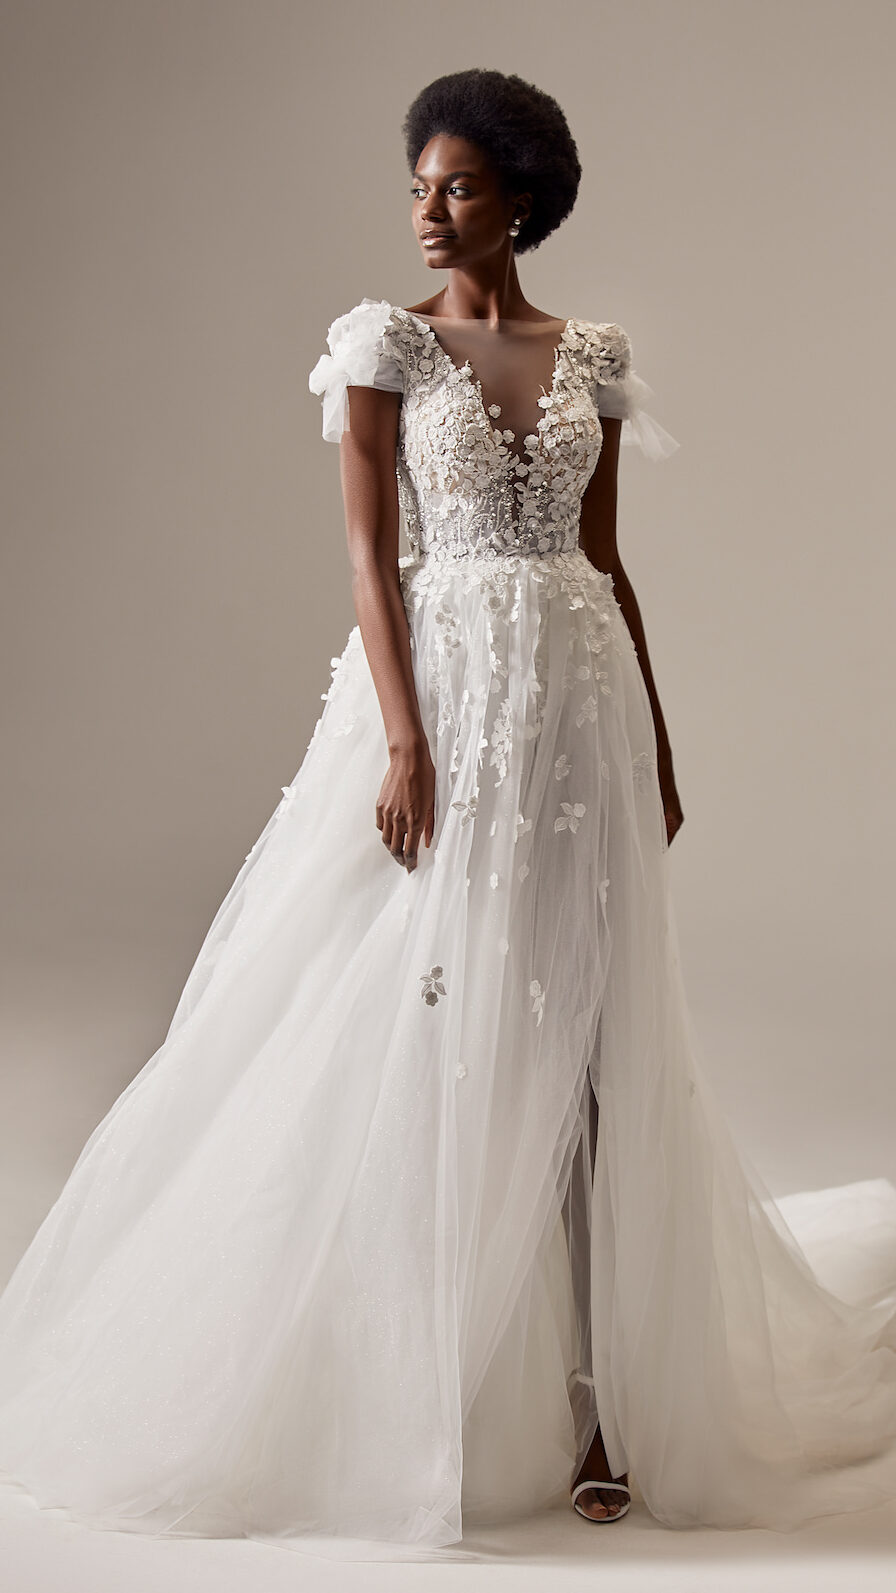 Ball gown Wedding Dress by Milla Nova - Kvita white lace